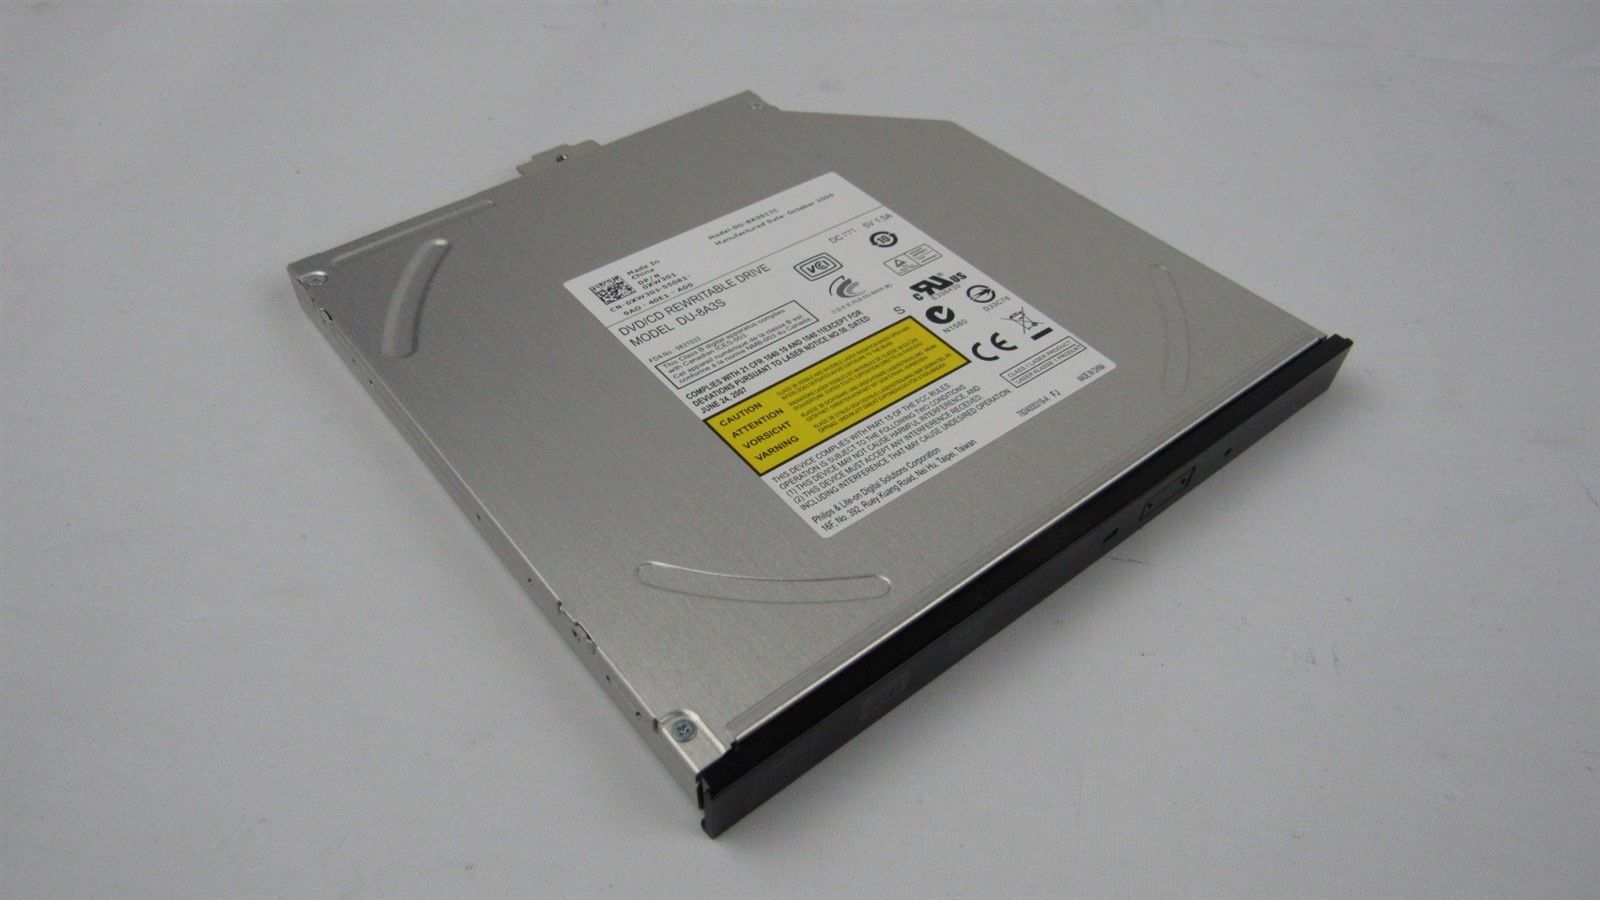 Dell Latitude E6400 Laptop SATA DVD-ROM Optical Drive DU-8A3S XW301 0XW301